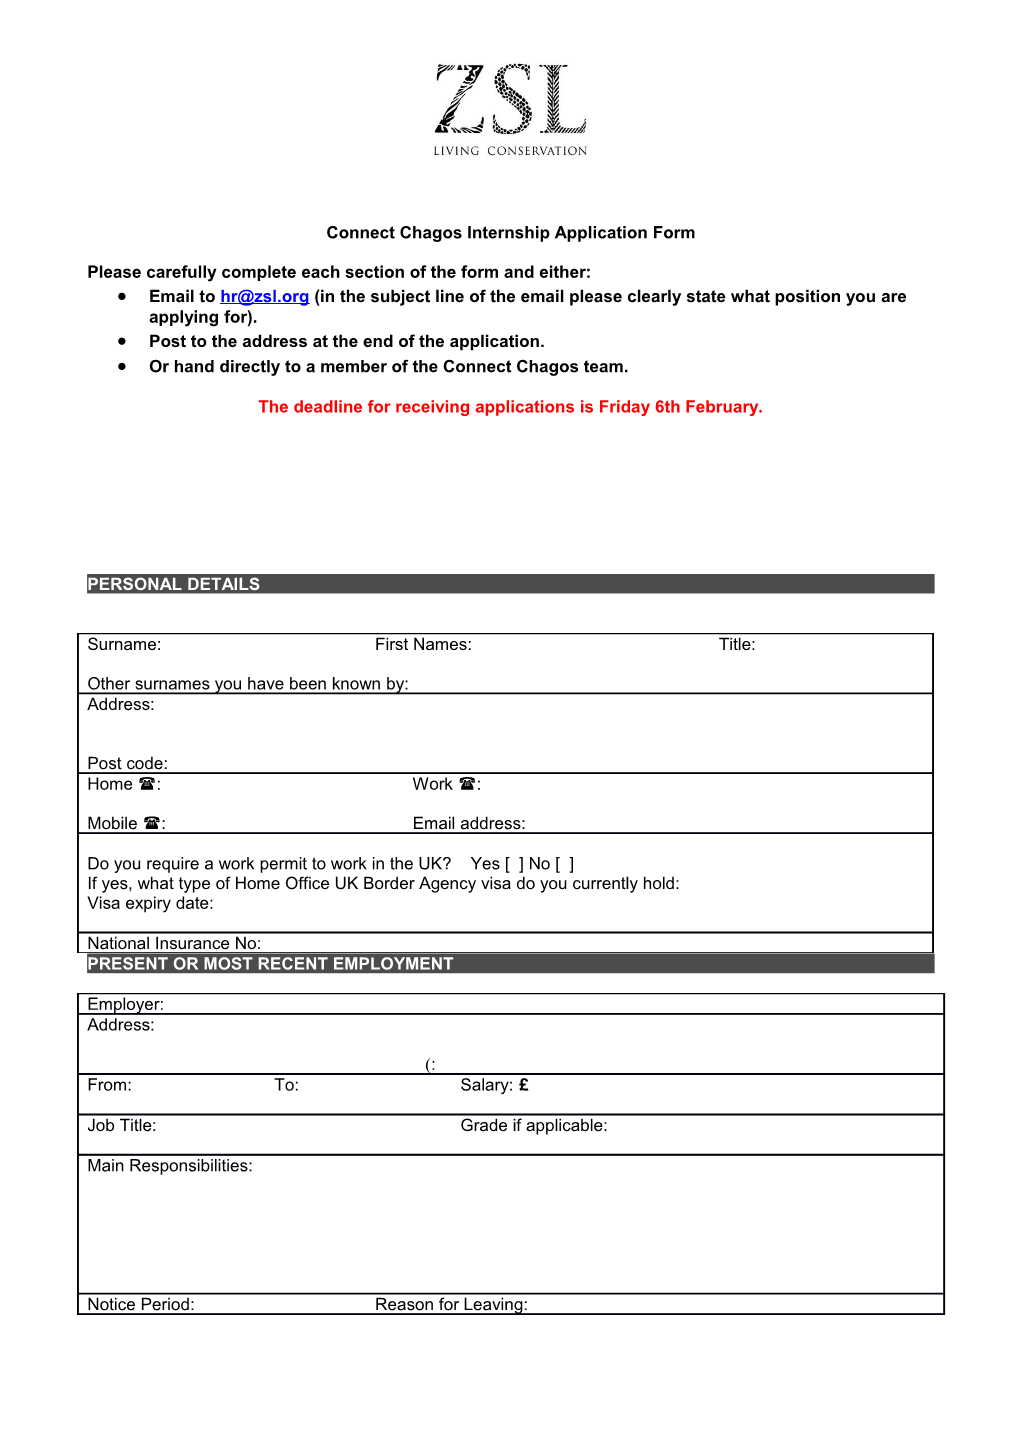 Connect Chagos Internship Application Form